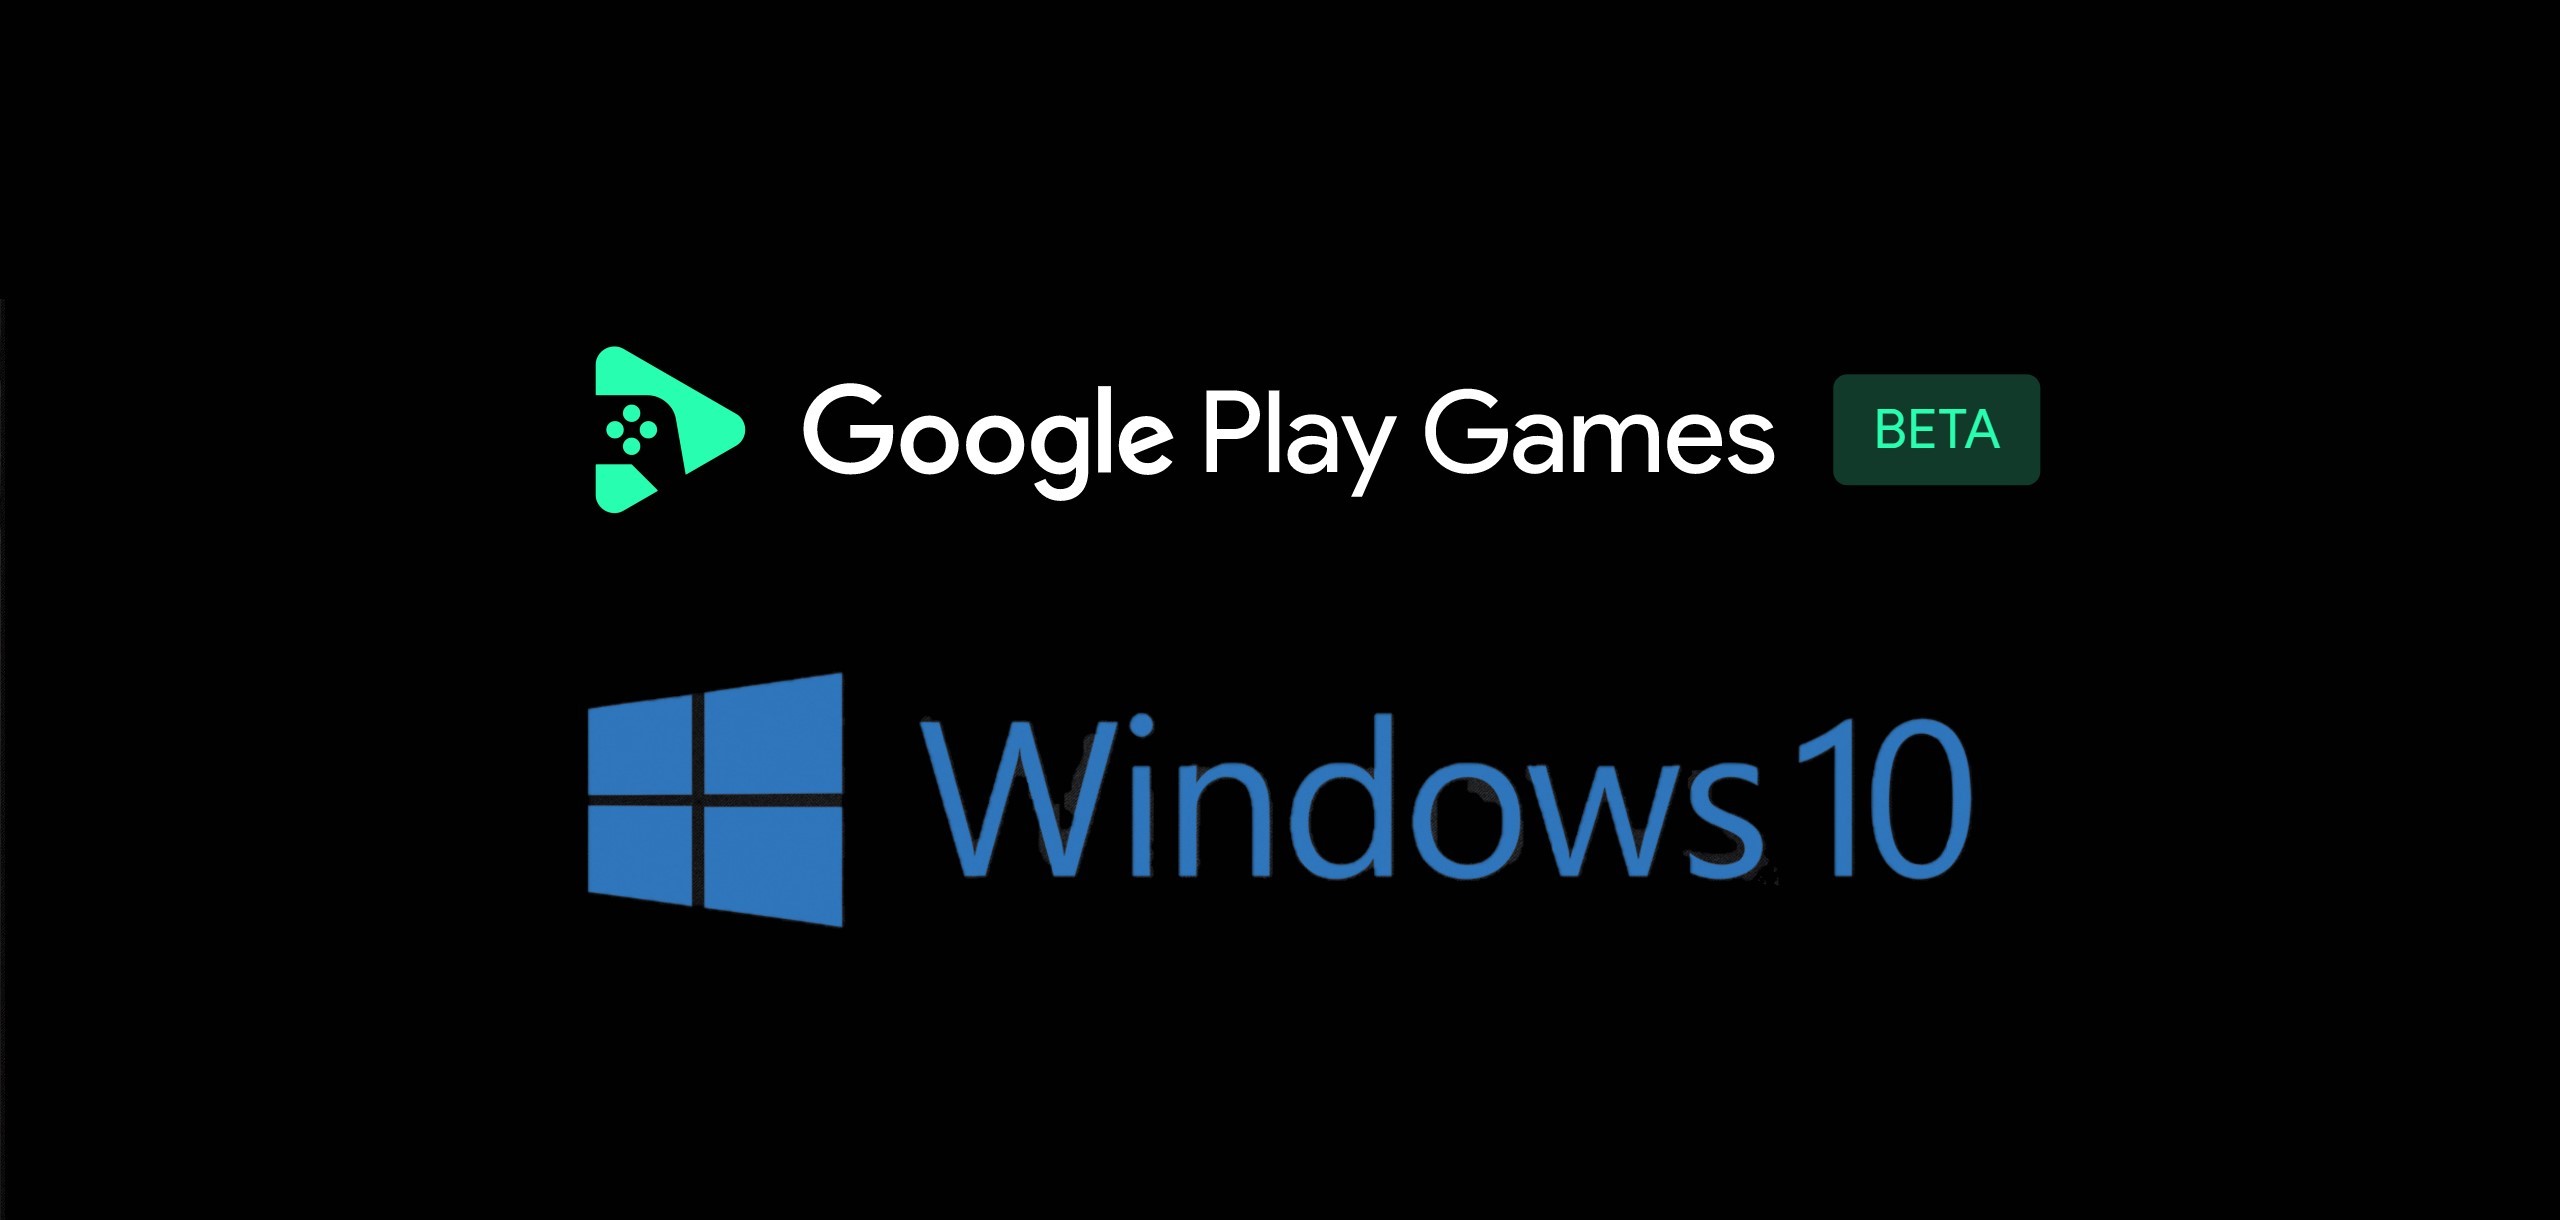 Google Play Games On Windows 